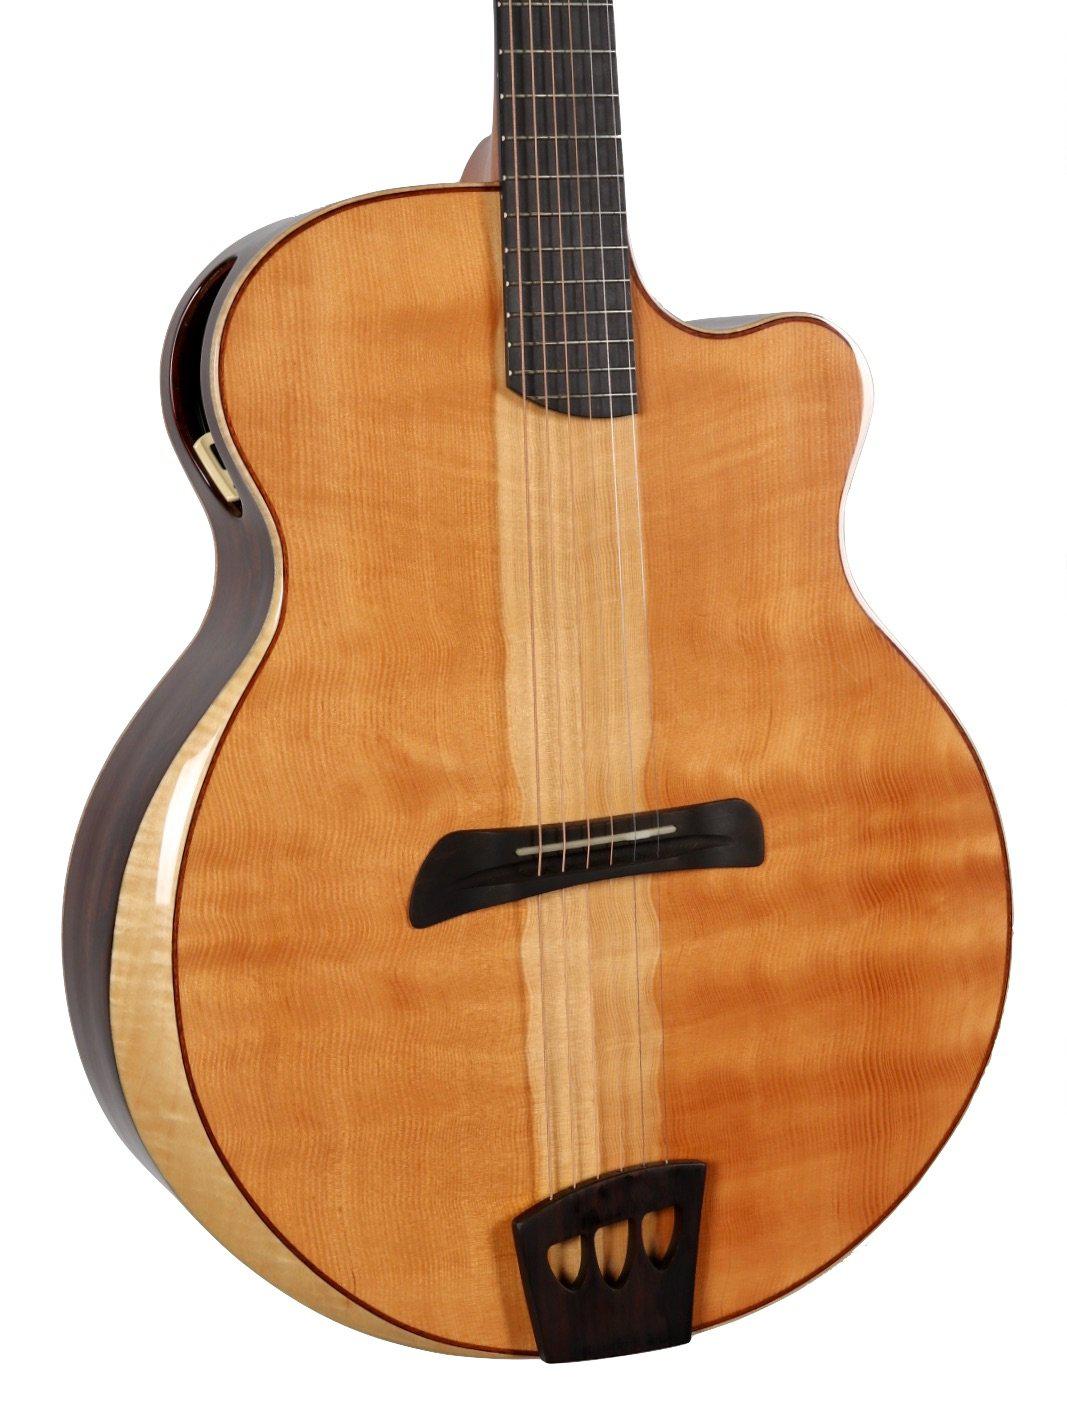 Batson Jumbo Figured Douglas Fir / Cloudy Cocobolo #19210102 - Batson - Heartbreaker Guitars